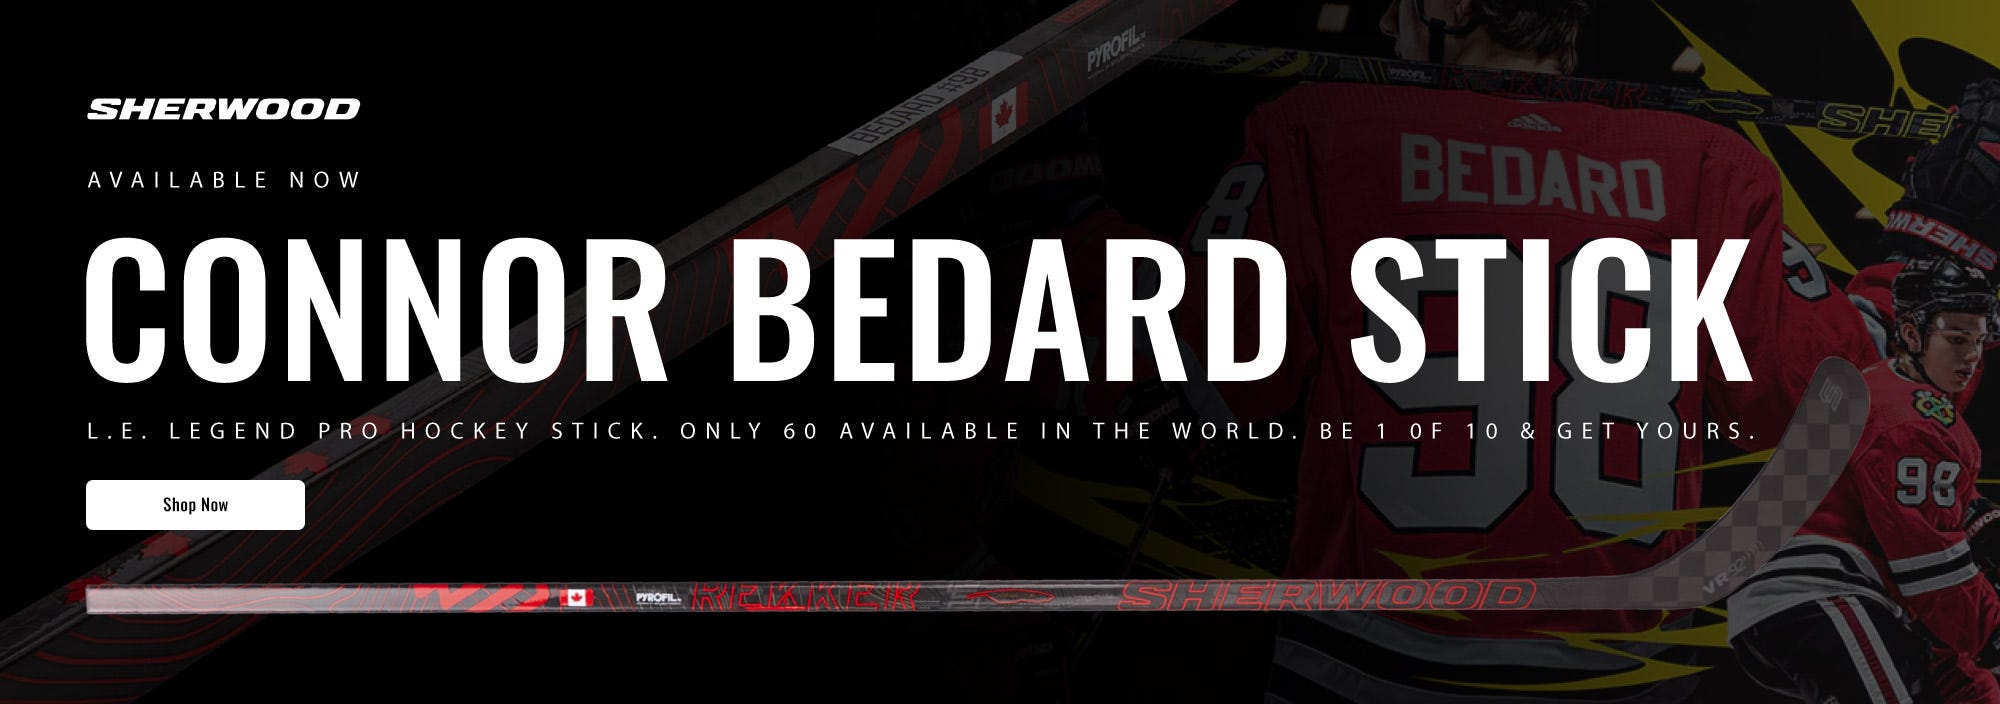 Sherwood Connor Bedard Stick: L.E. Legend Pro Hockey Stick